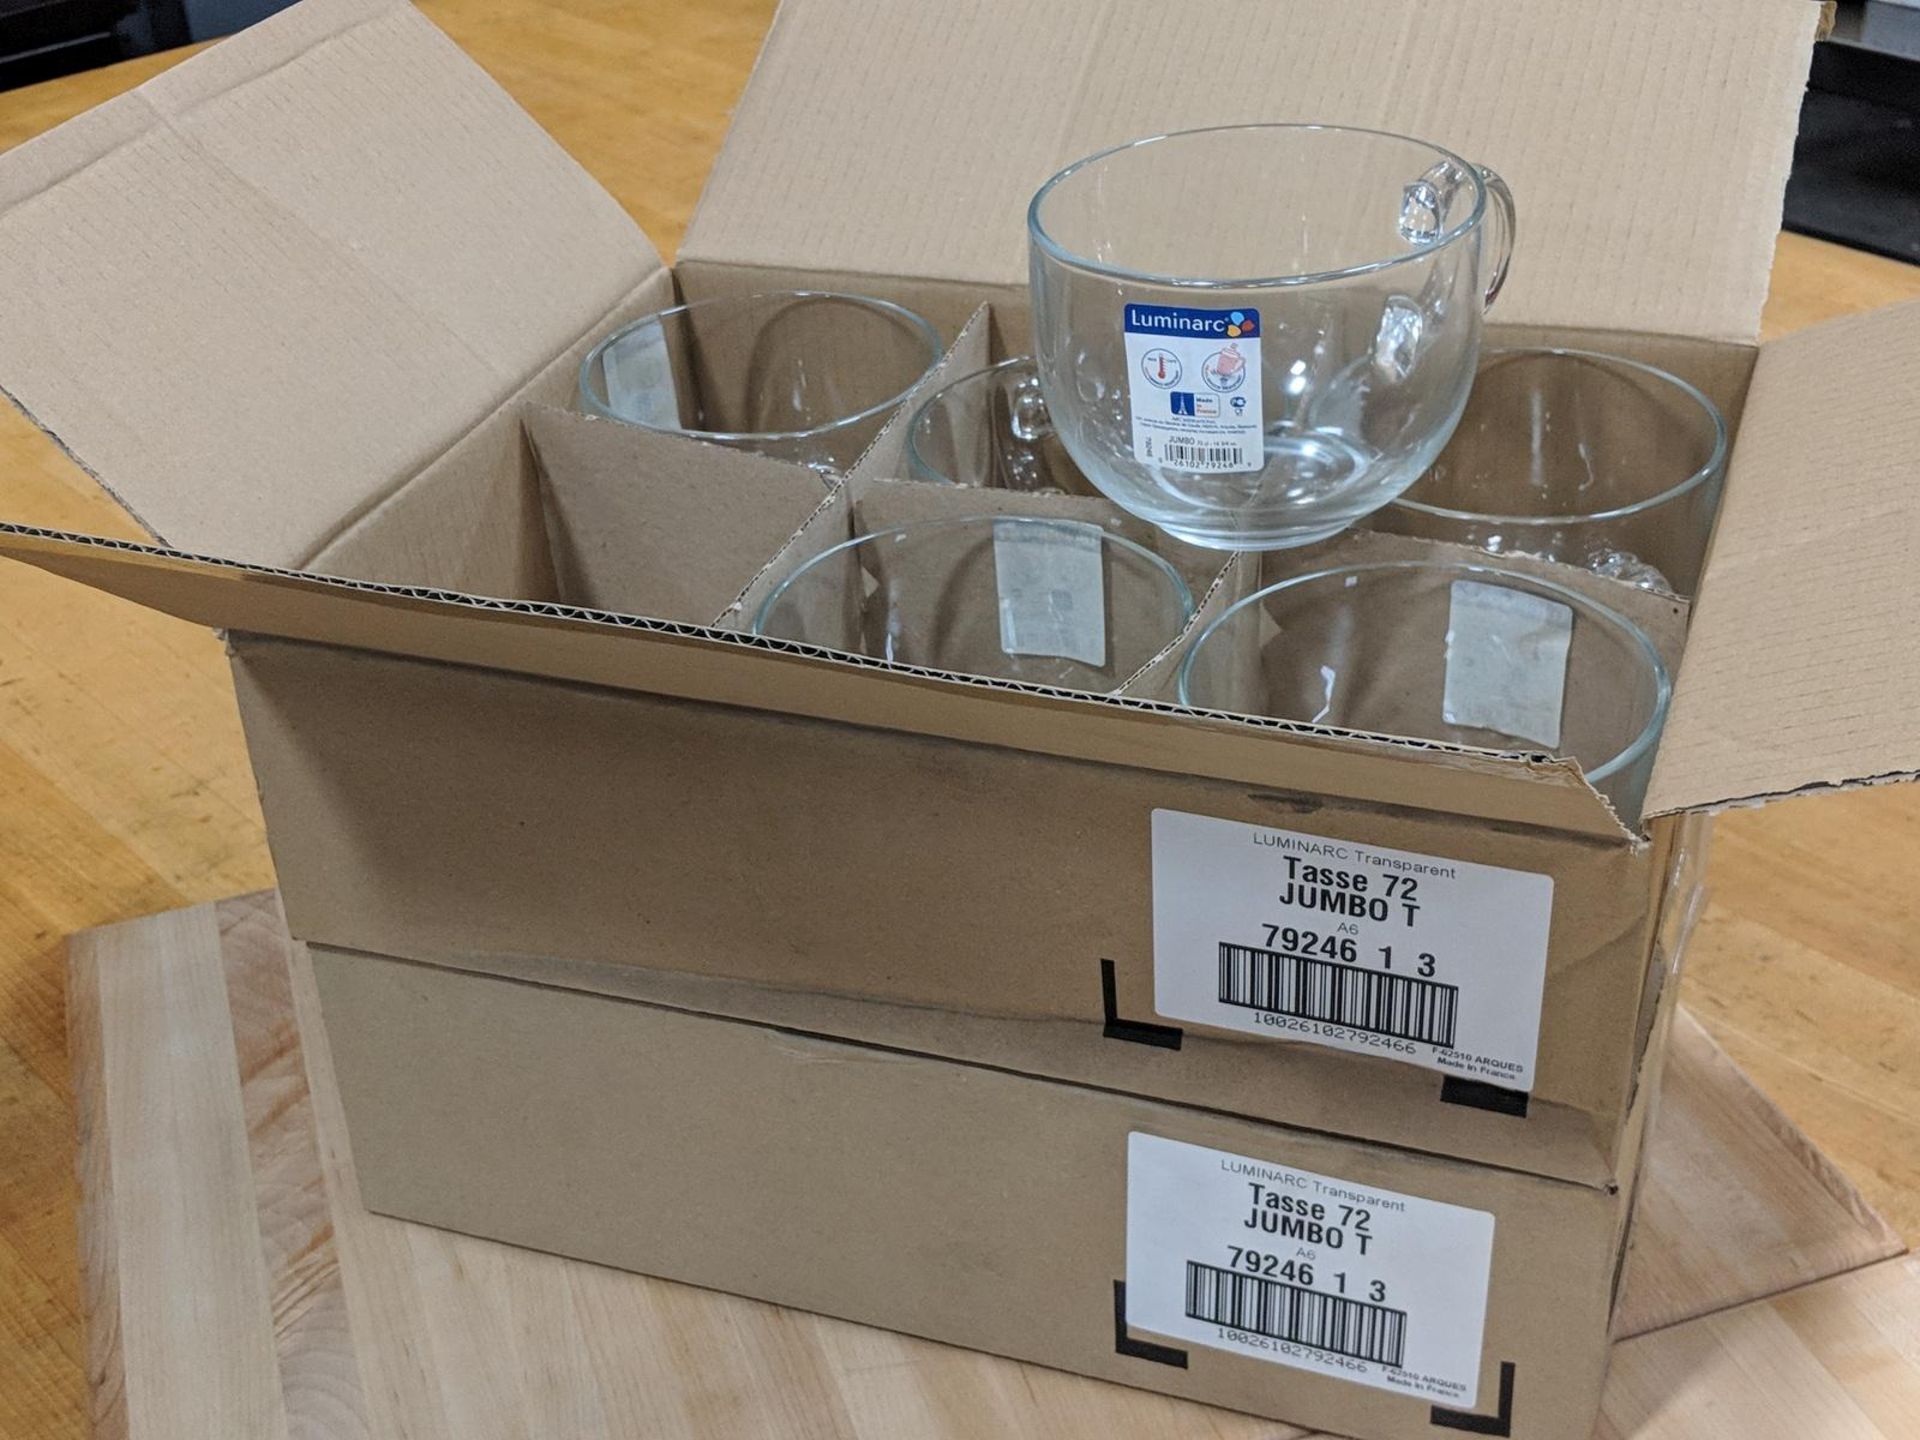 17oz/500ml Clear Glass Mugs - Lot of 12 (2 Cases), Luminarc 79246